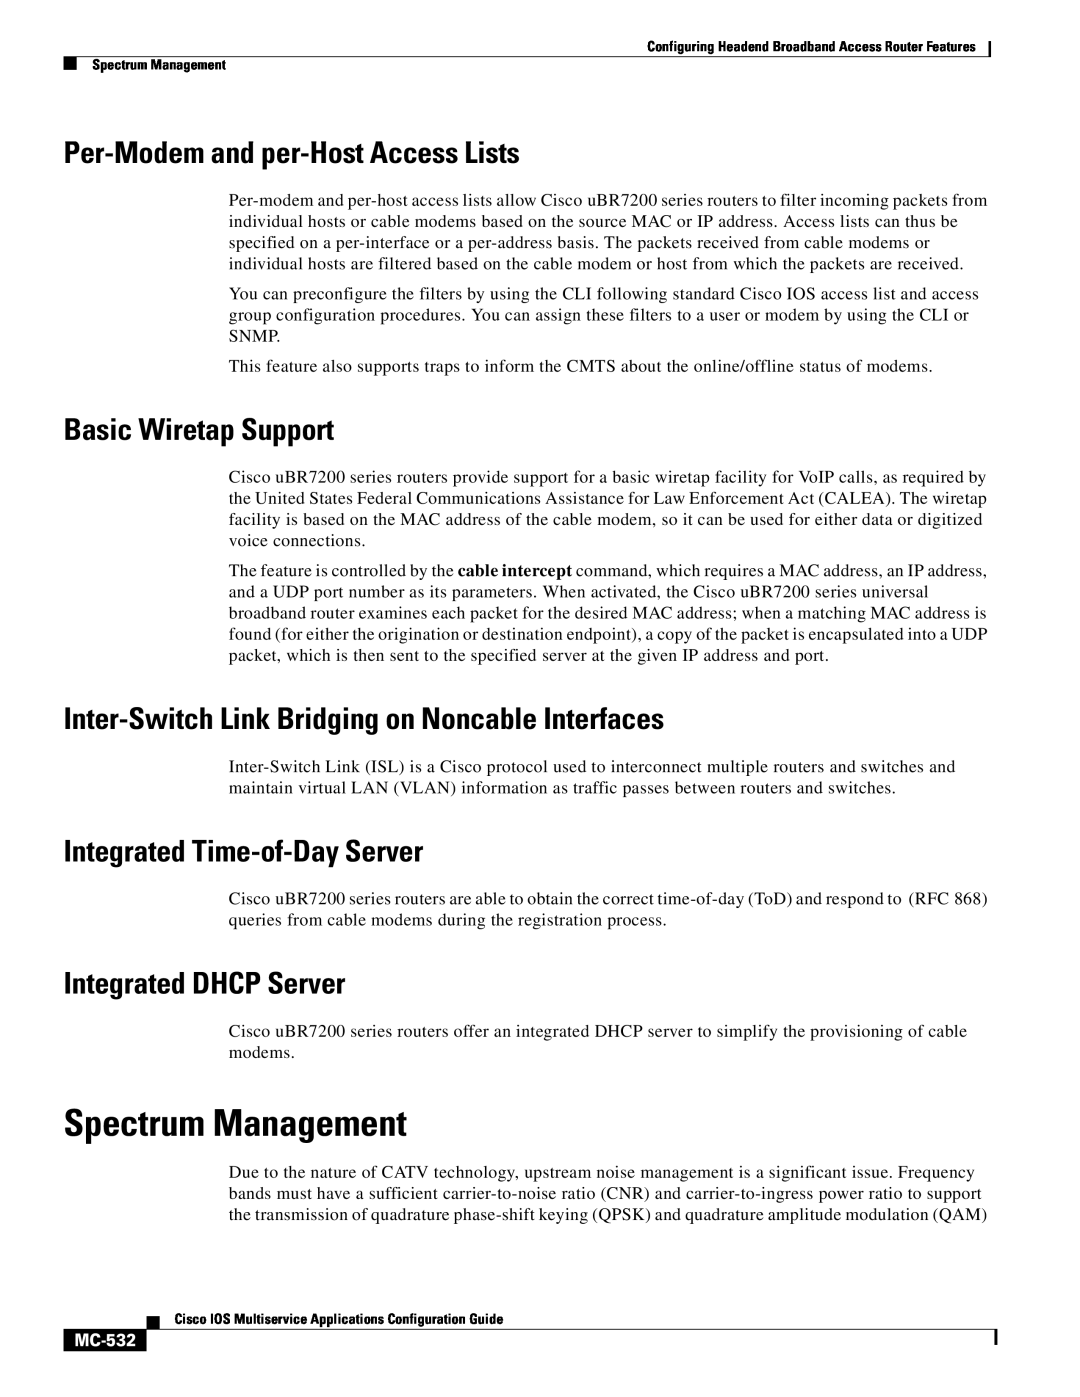 Cisco Systems uBR7200 manual Spectrum Management, Per-Modem and per-Host Access Lists, Basic Wiretap Support, MC-532 